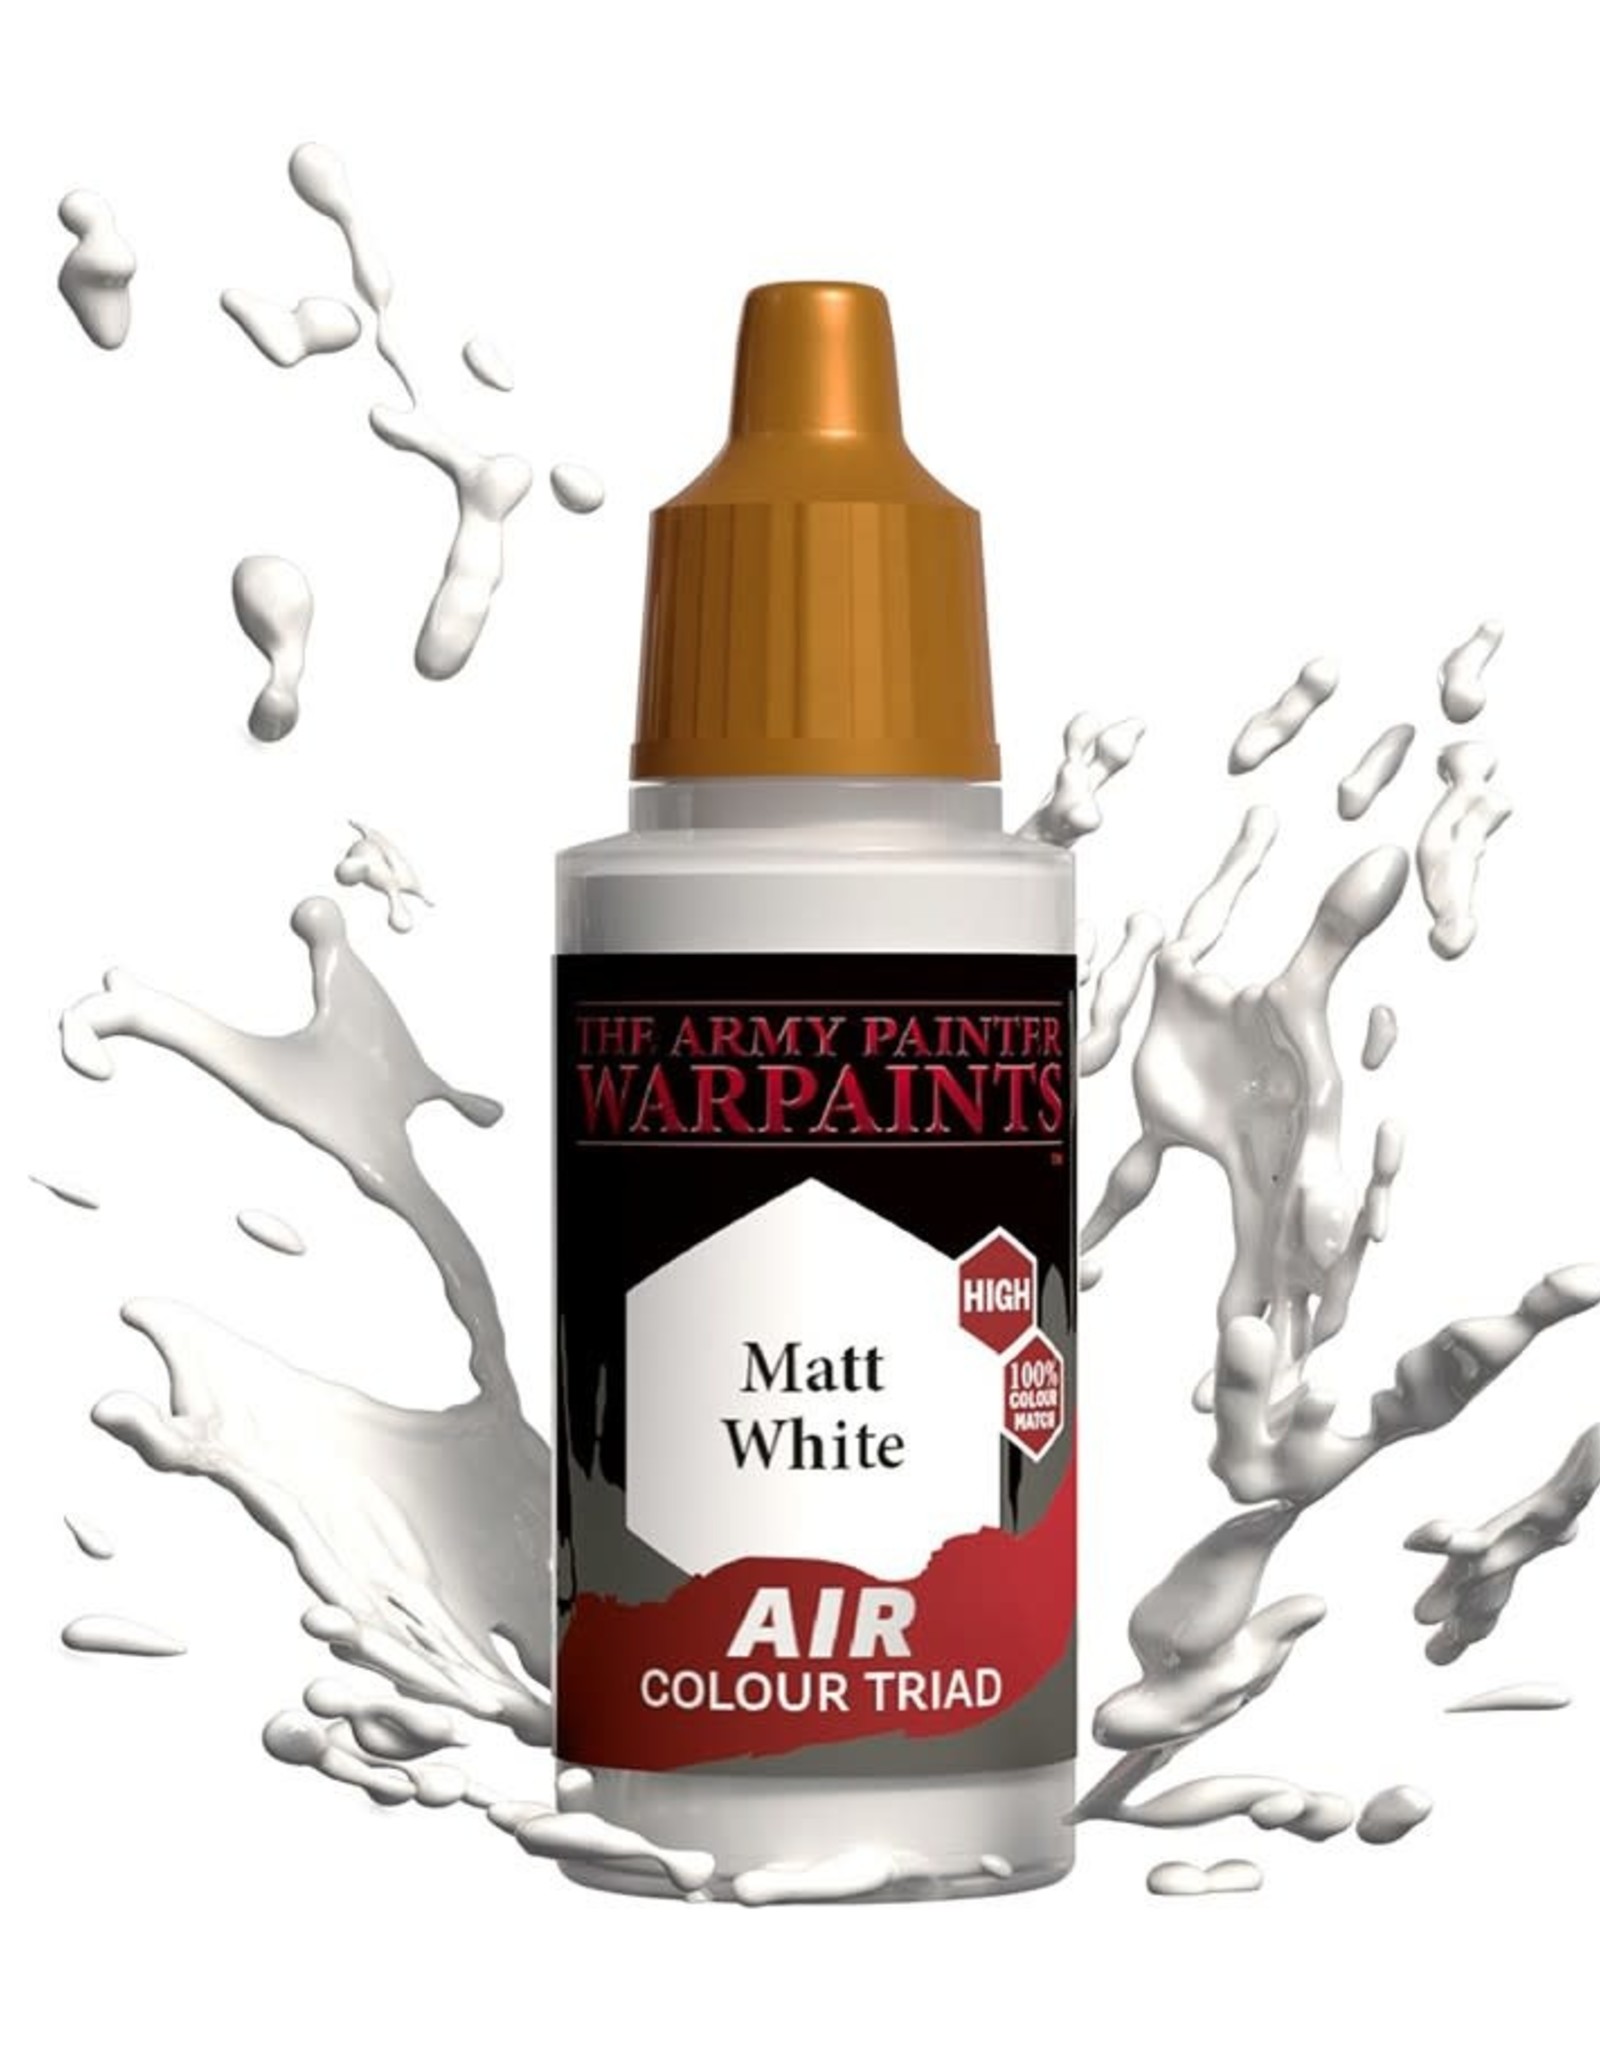 The Army Painter Warpaint Air: Matt White (18ml)